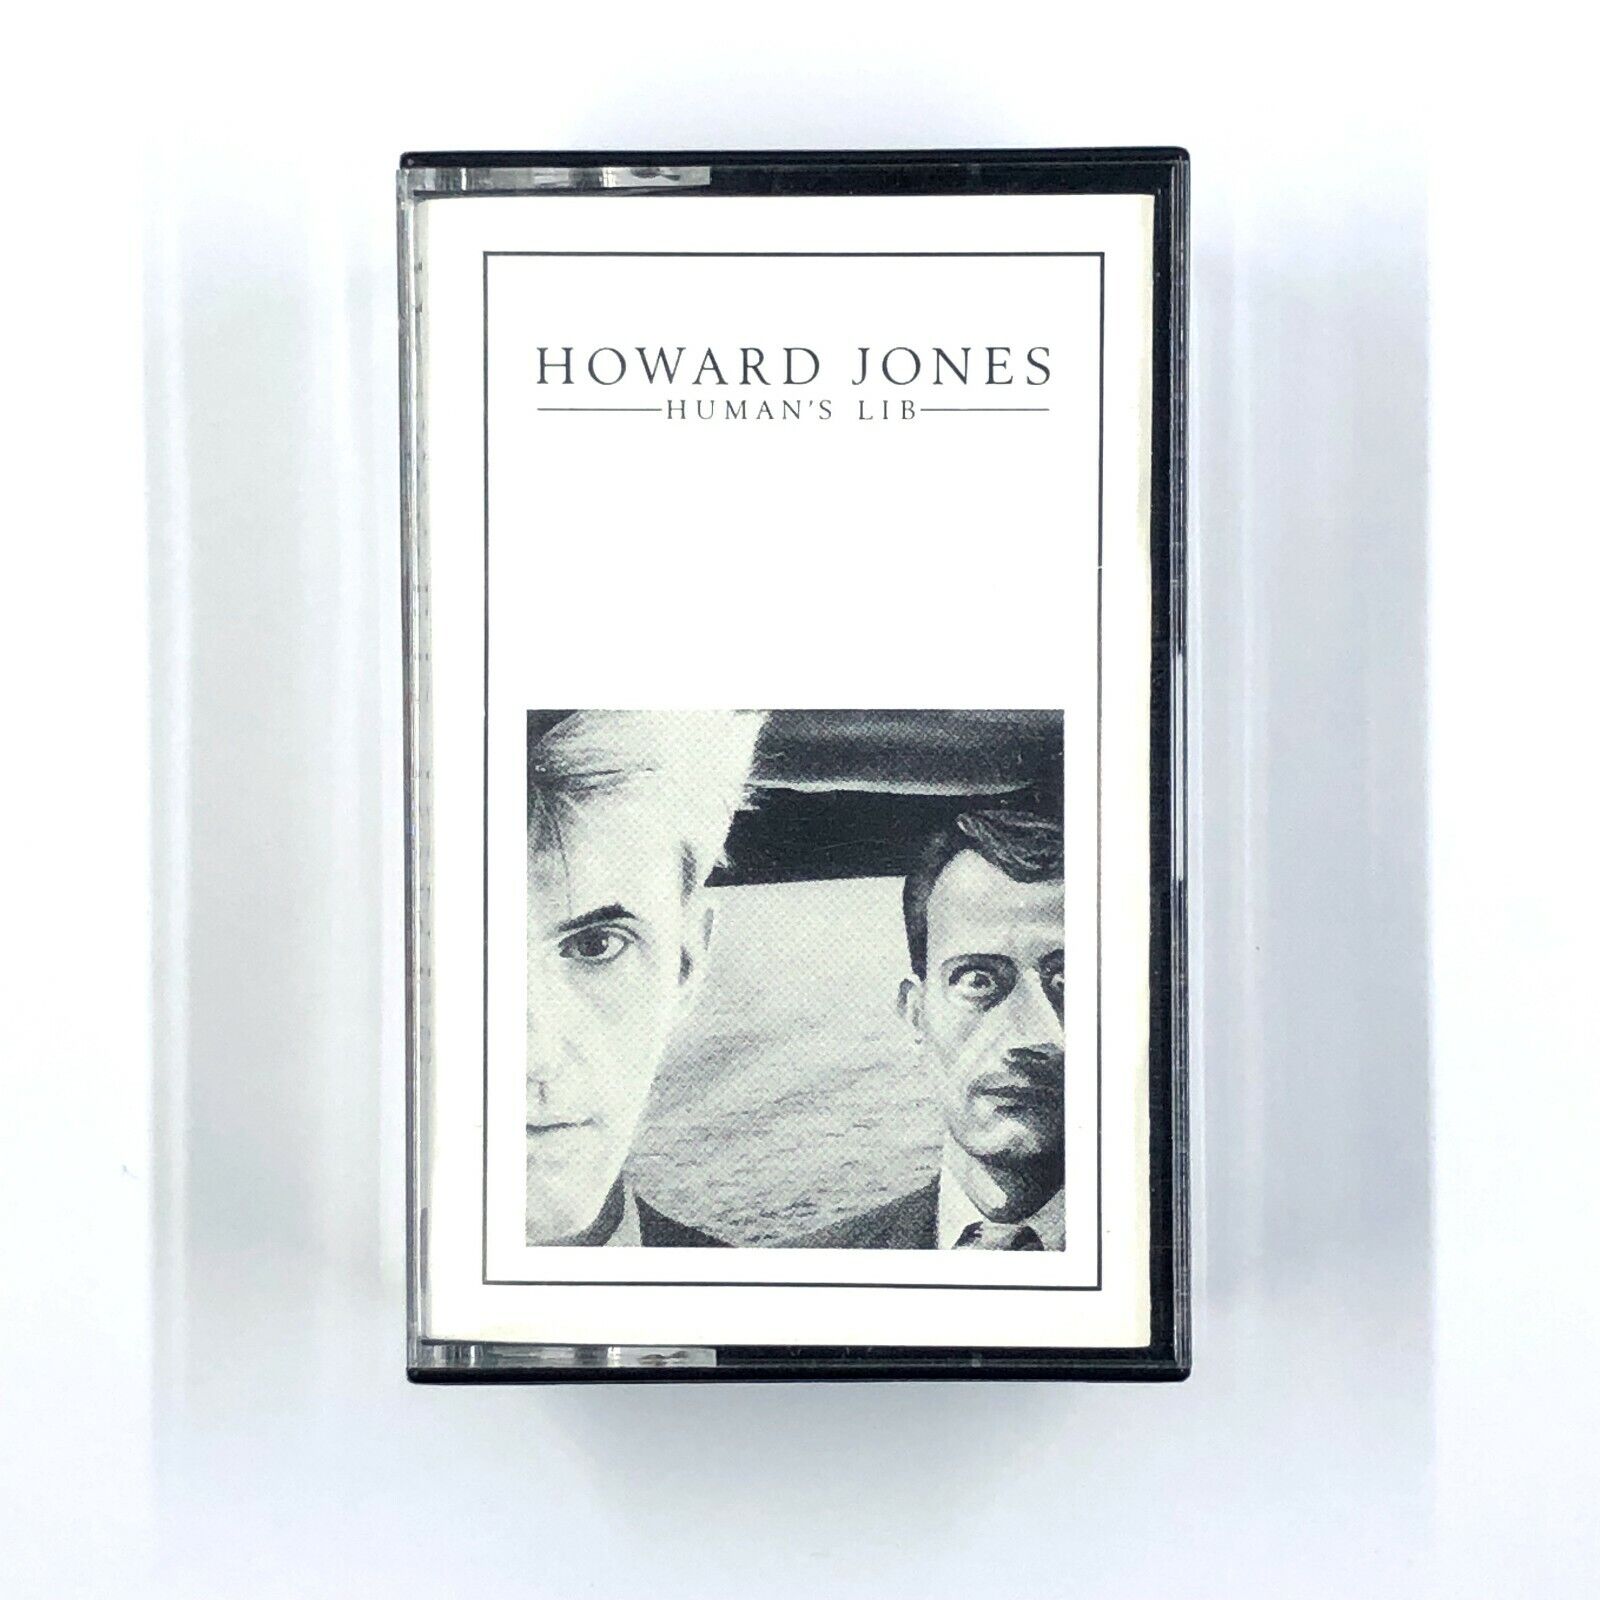 Howard Jones - Human's Lib - RARE Israel Made 1984 LP Synth Pop | eBay